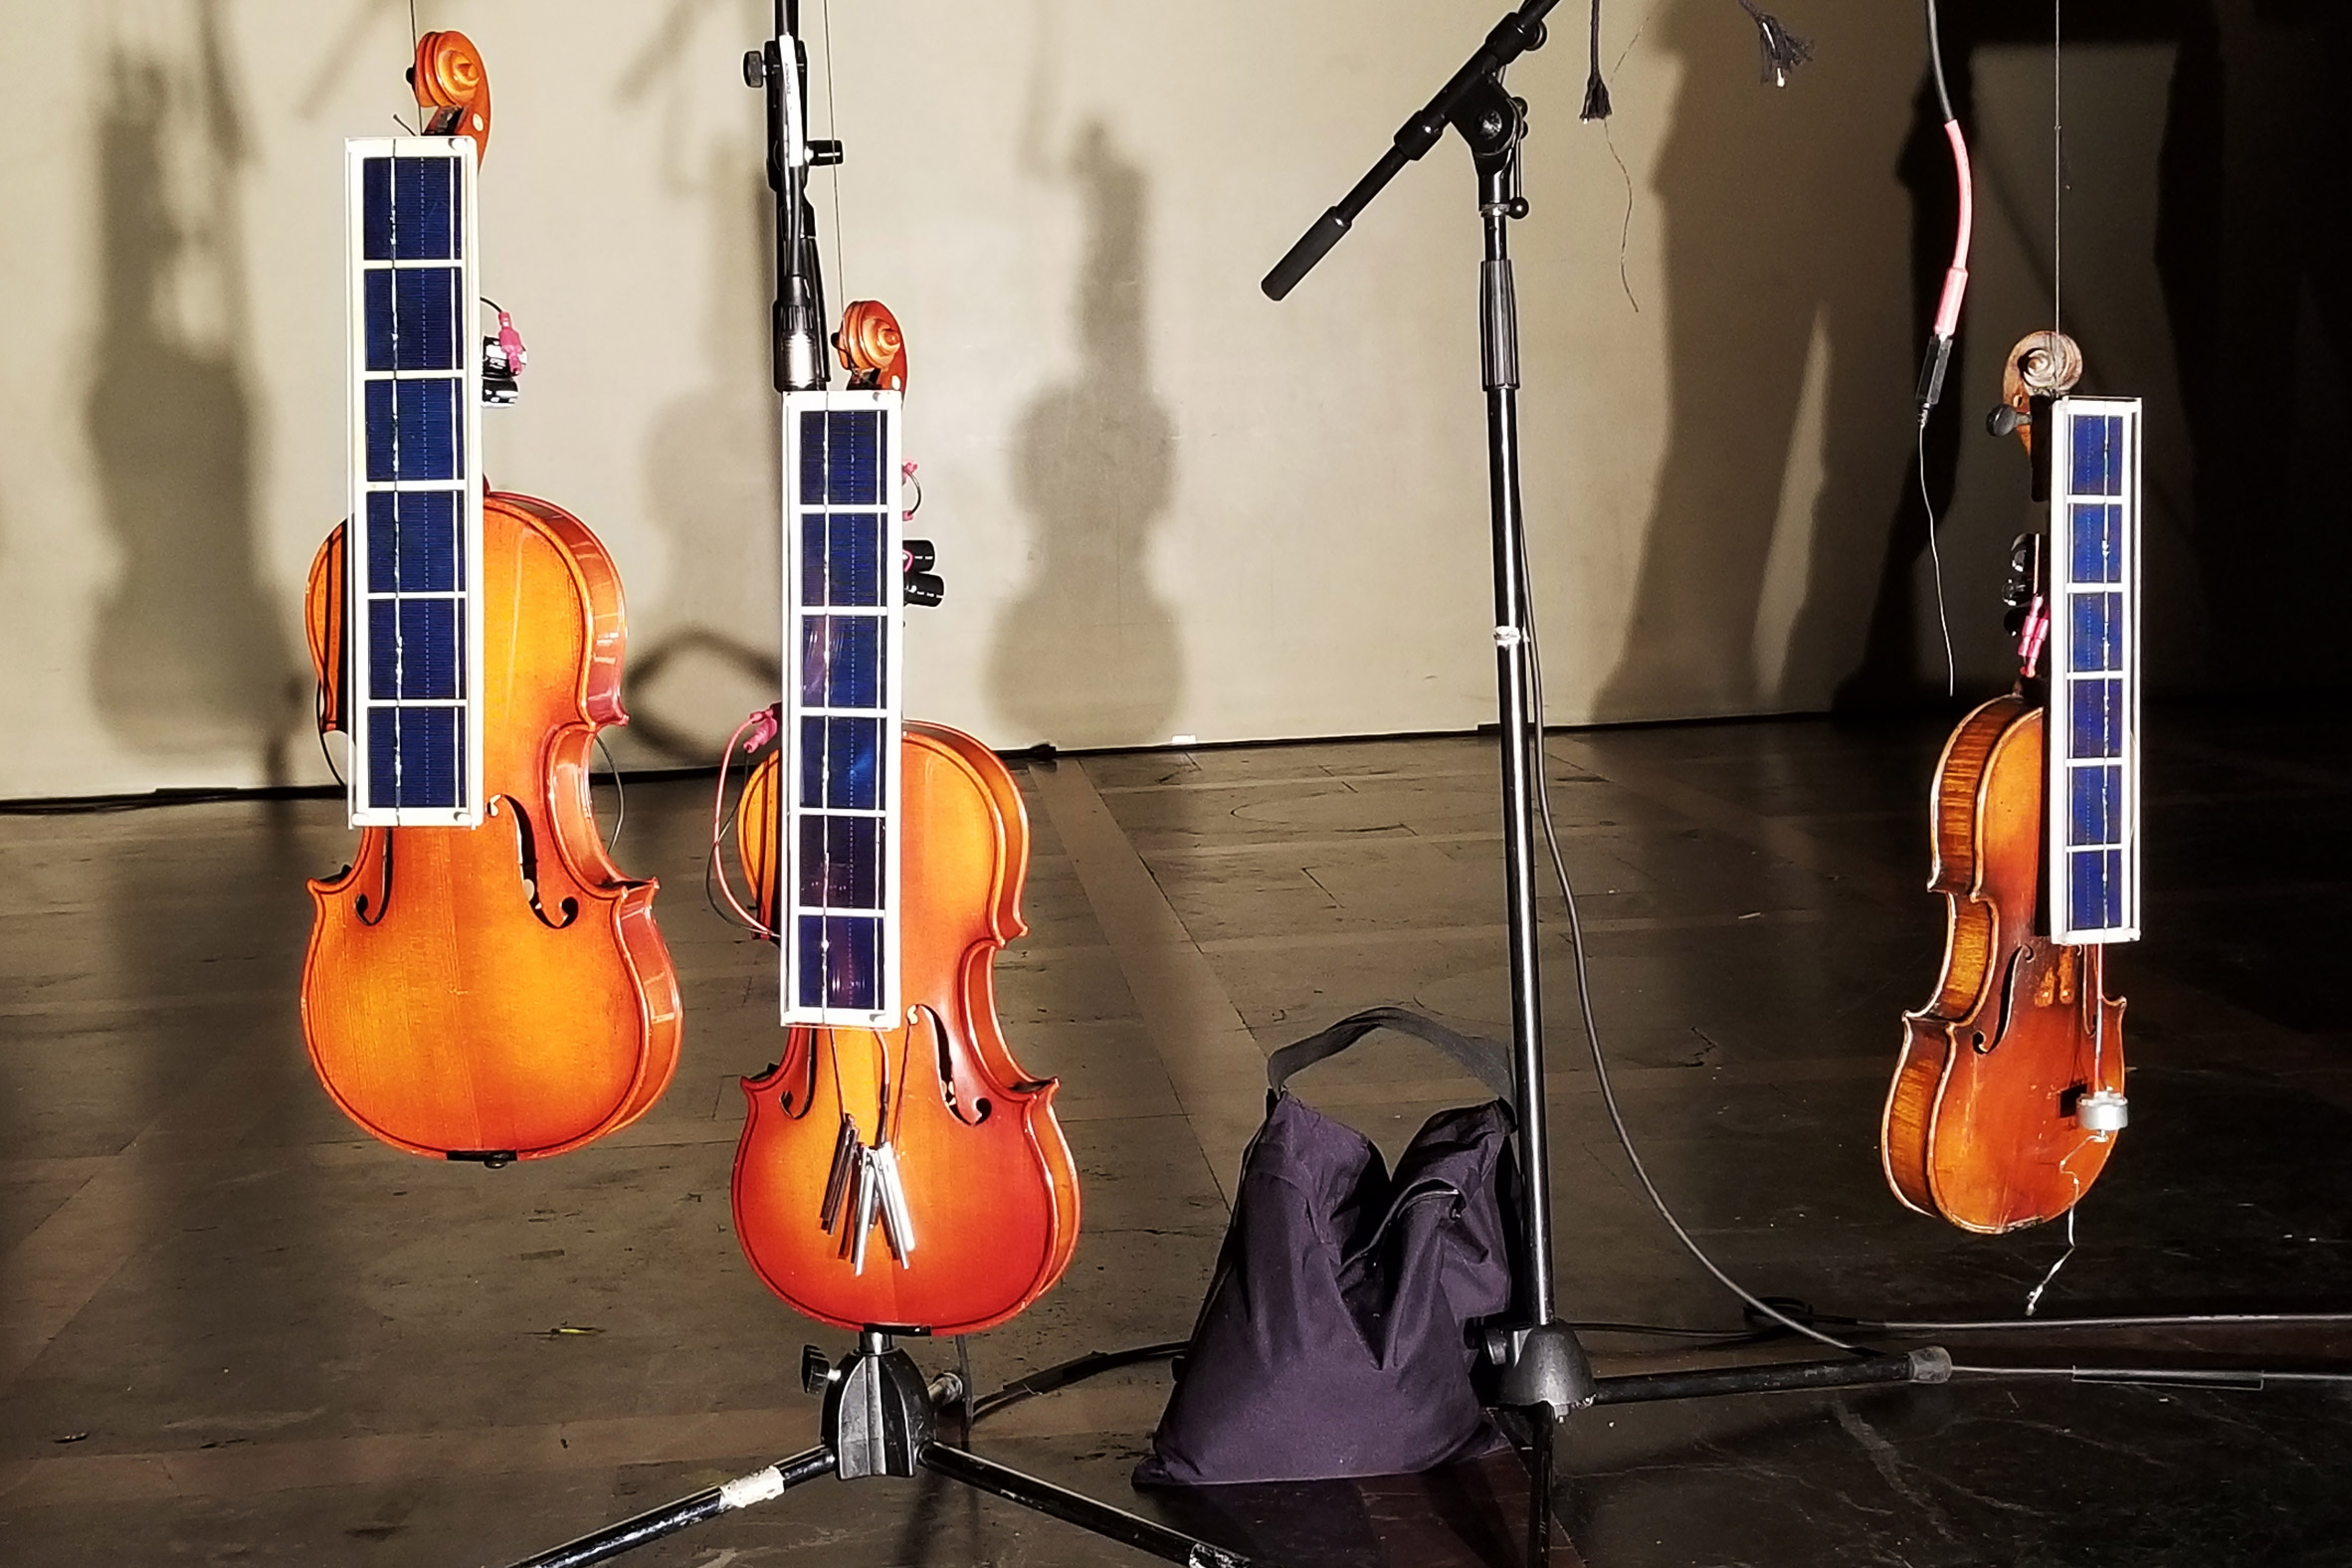 Solar-powered violins by Alex Nathanson